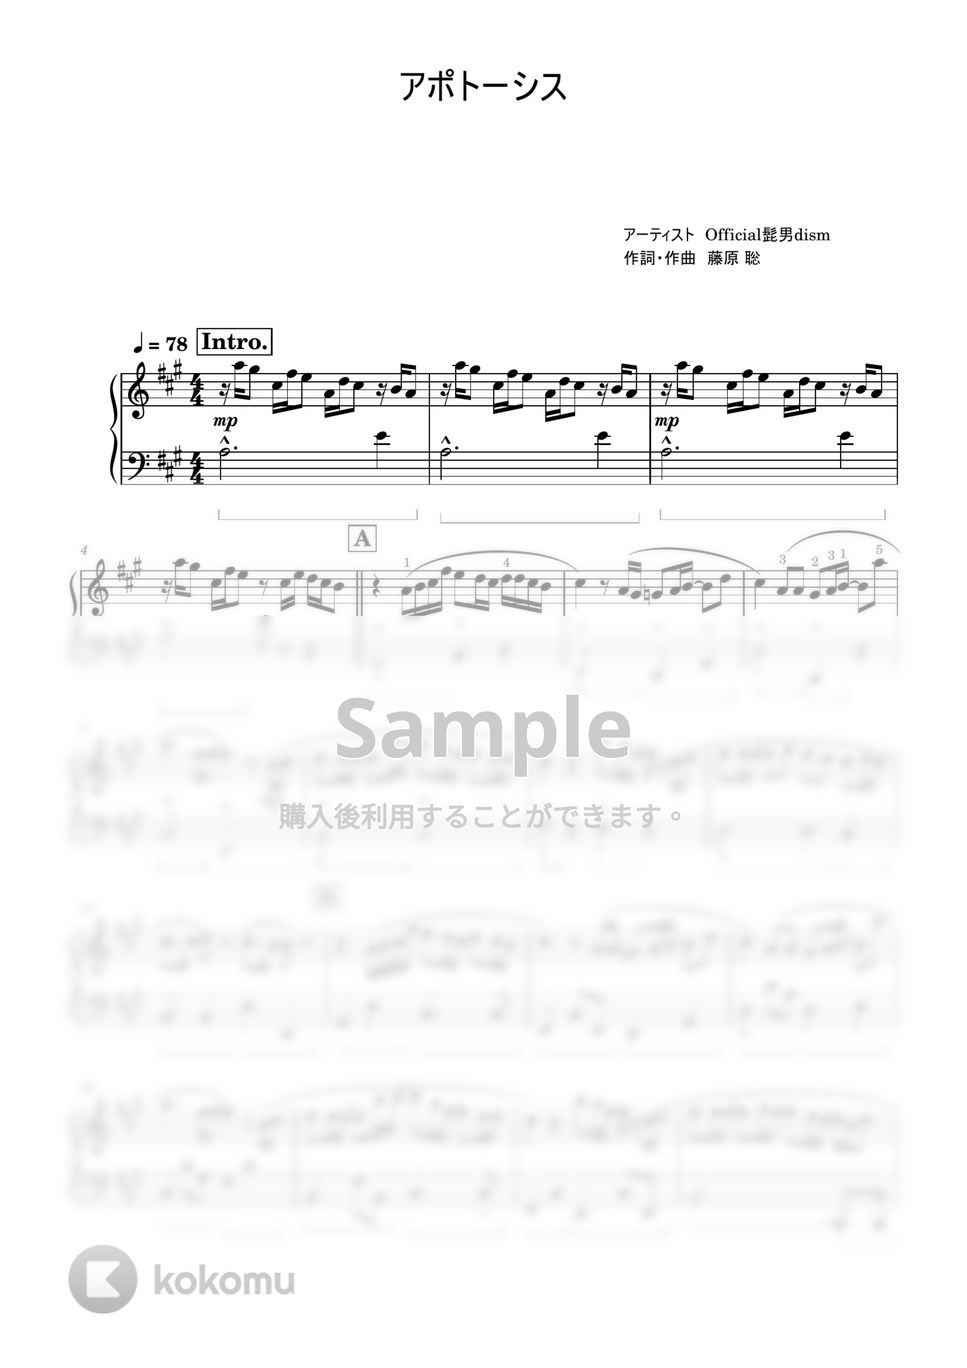 Official髭男dism - アポトーシス (初級レベル) by Saori8Piano